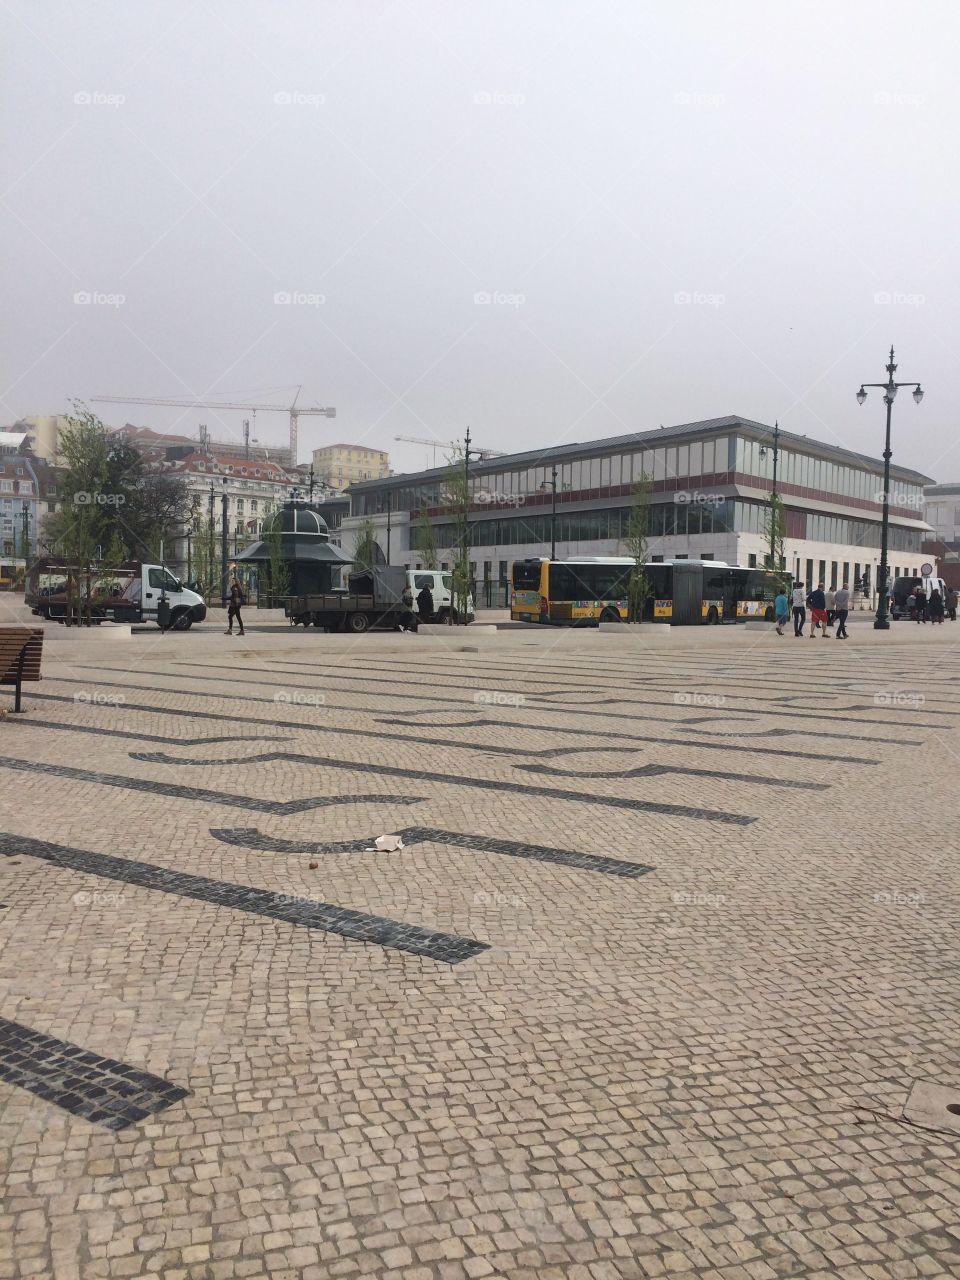 Turista area in Lisbon Portugal near to Cais Sodre 